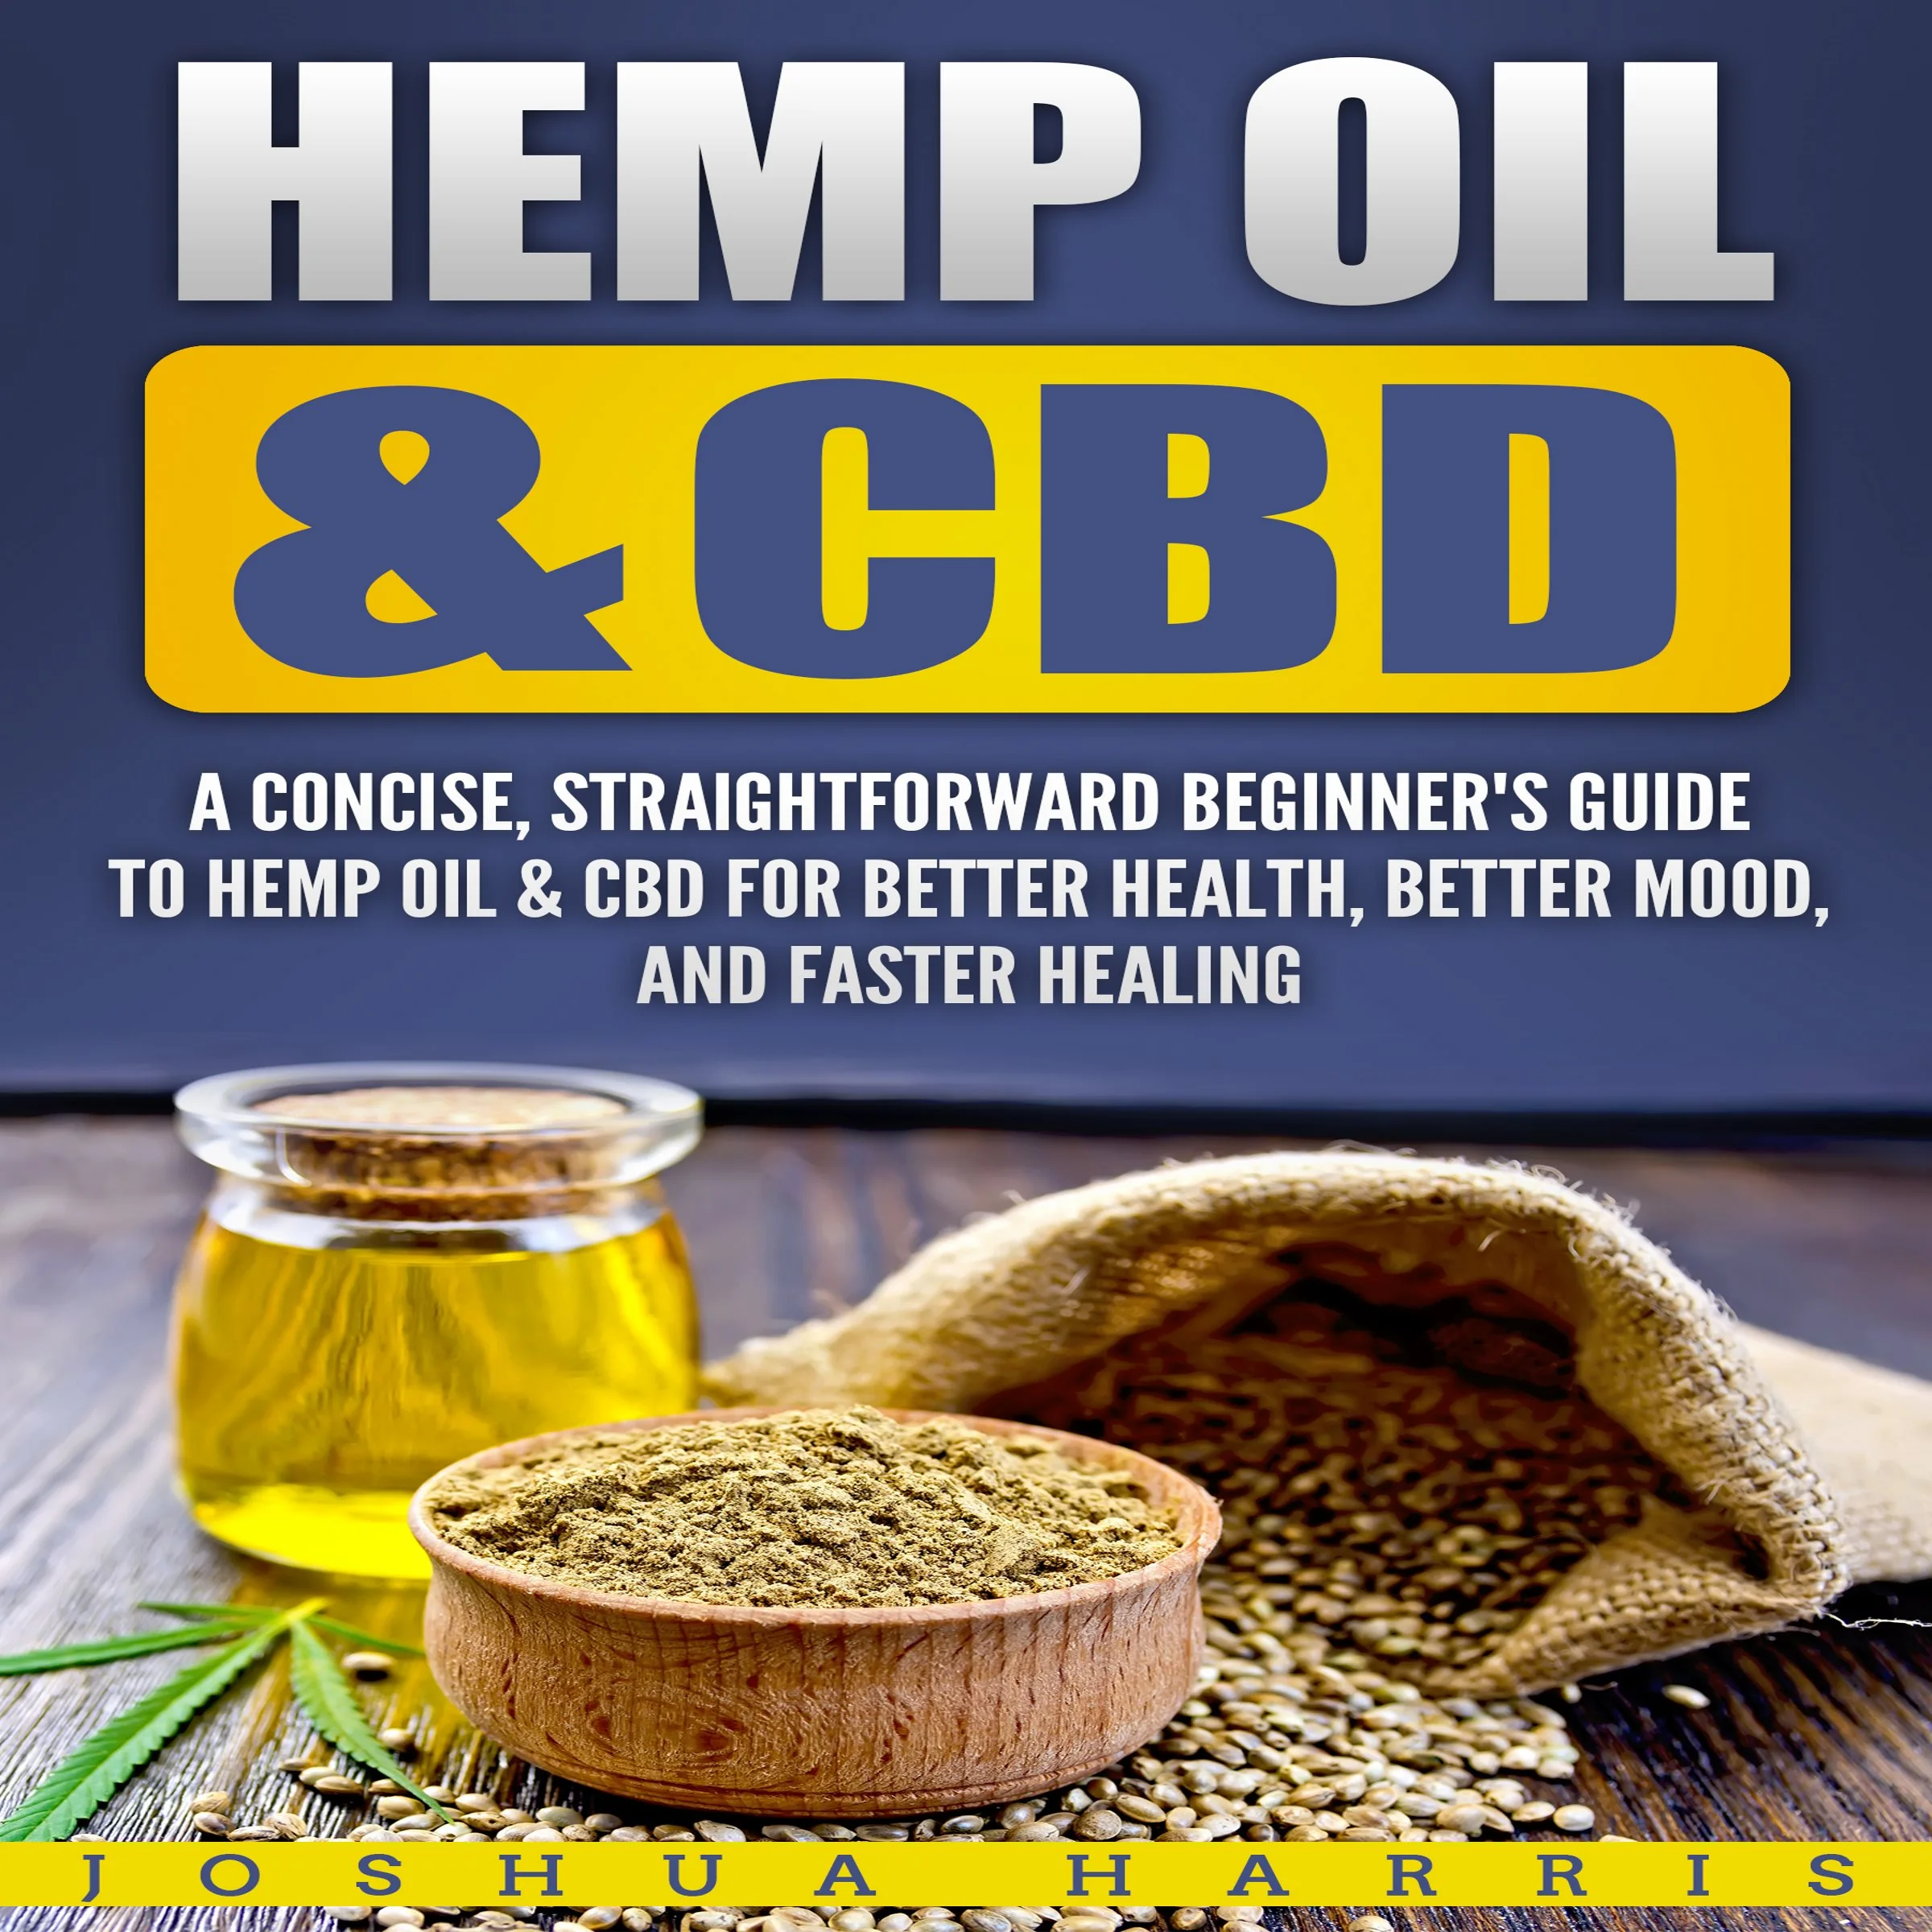 Hemp Oil & CBD: A Concise, Straightforward Beginner's Guide to Hemp Oil & CBD for Better Health, Better Mood and Faster Healing Audiobook by Joshua Harris